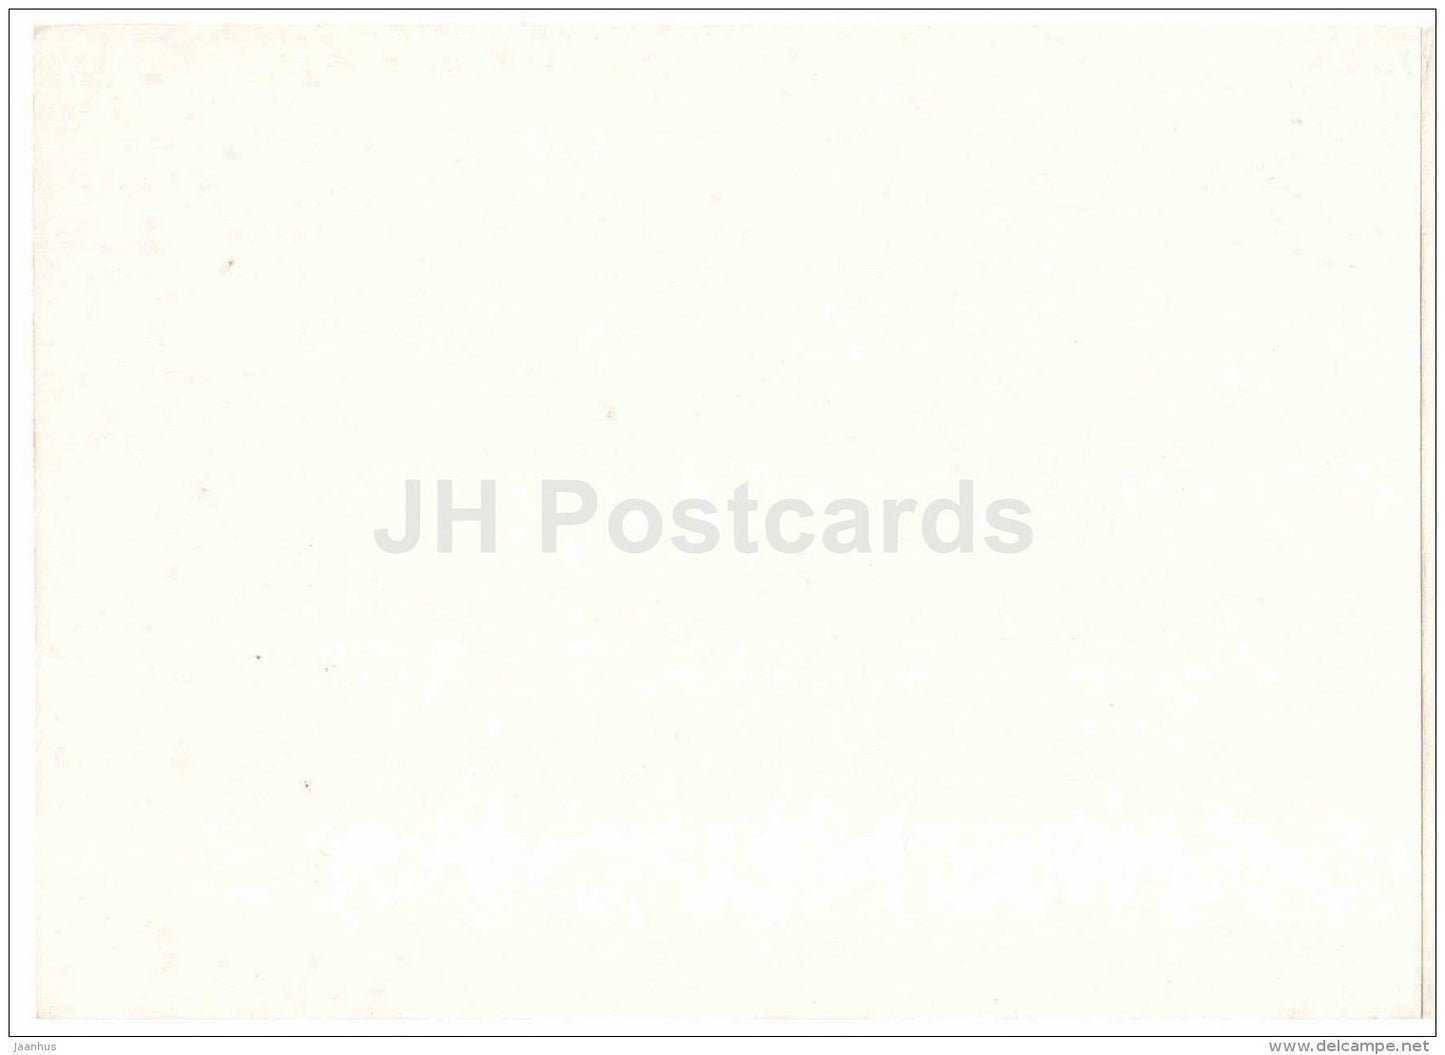 New Year greeting card - fir tree - cone - Estonia USSR - unused - JH Postcards